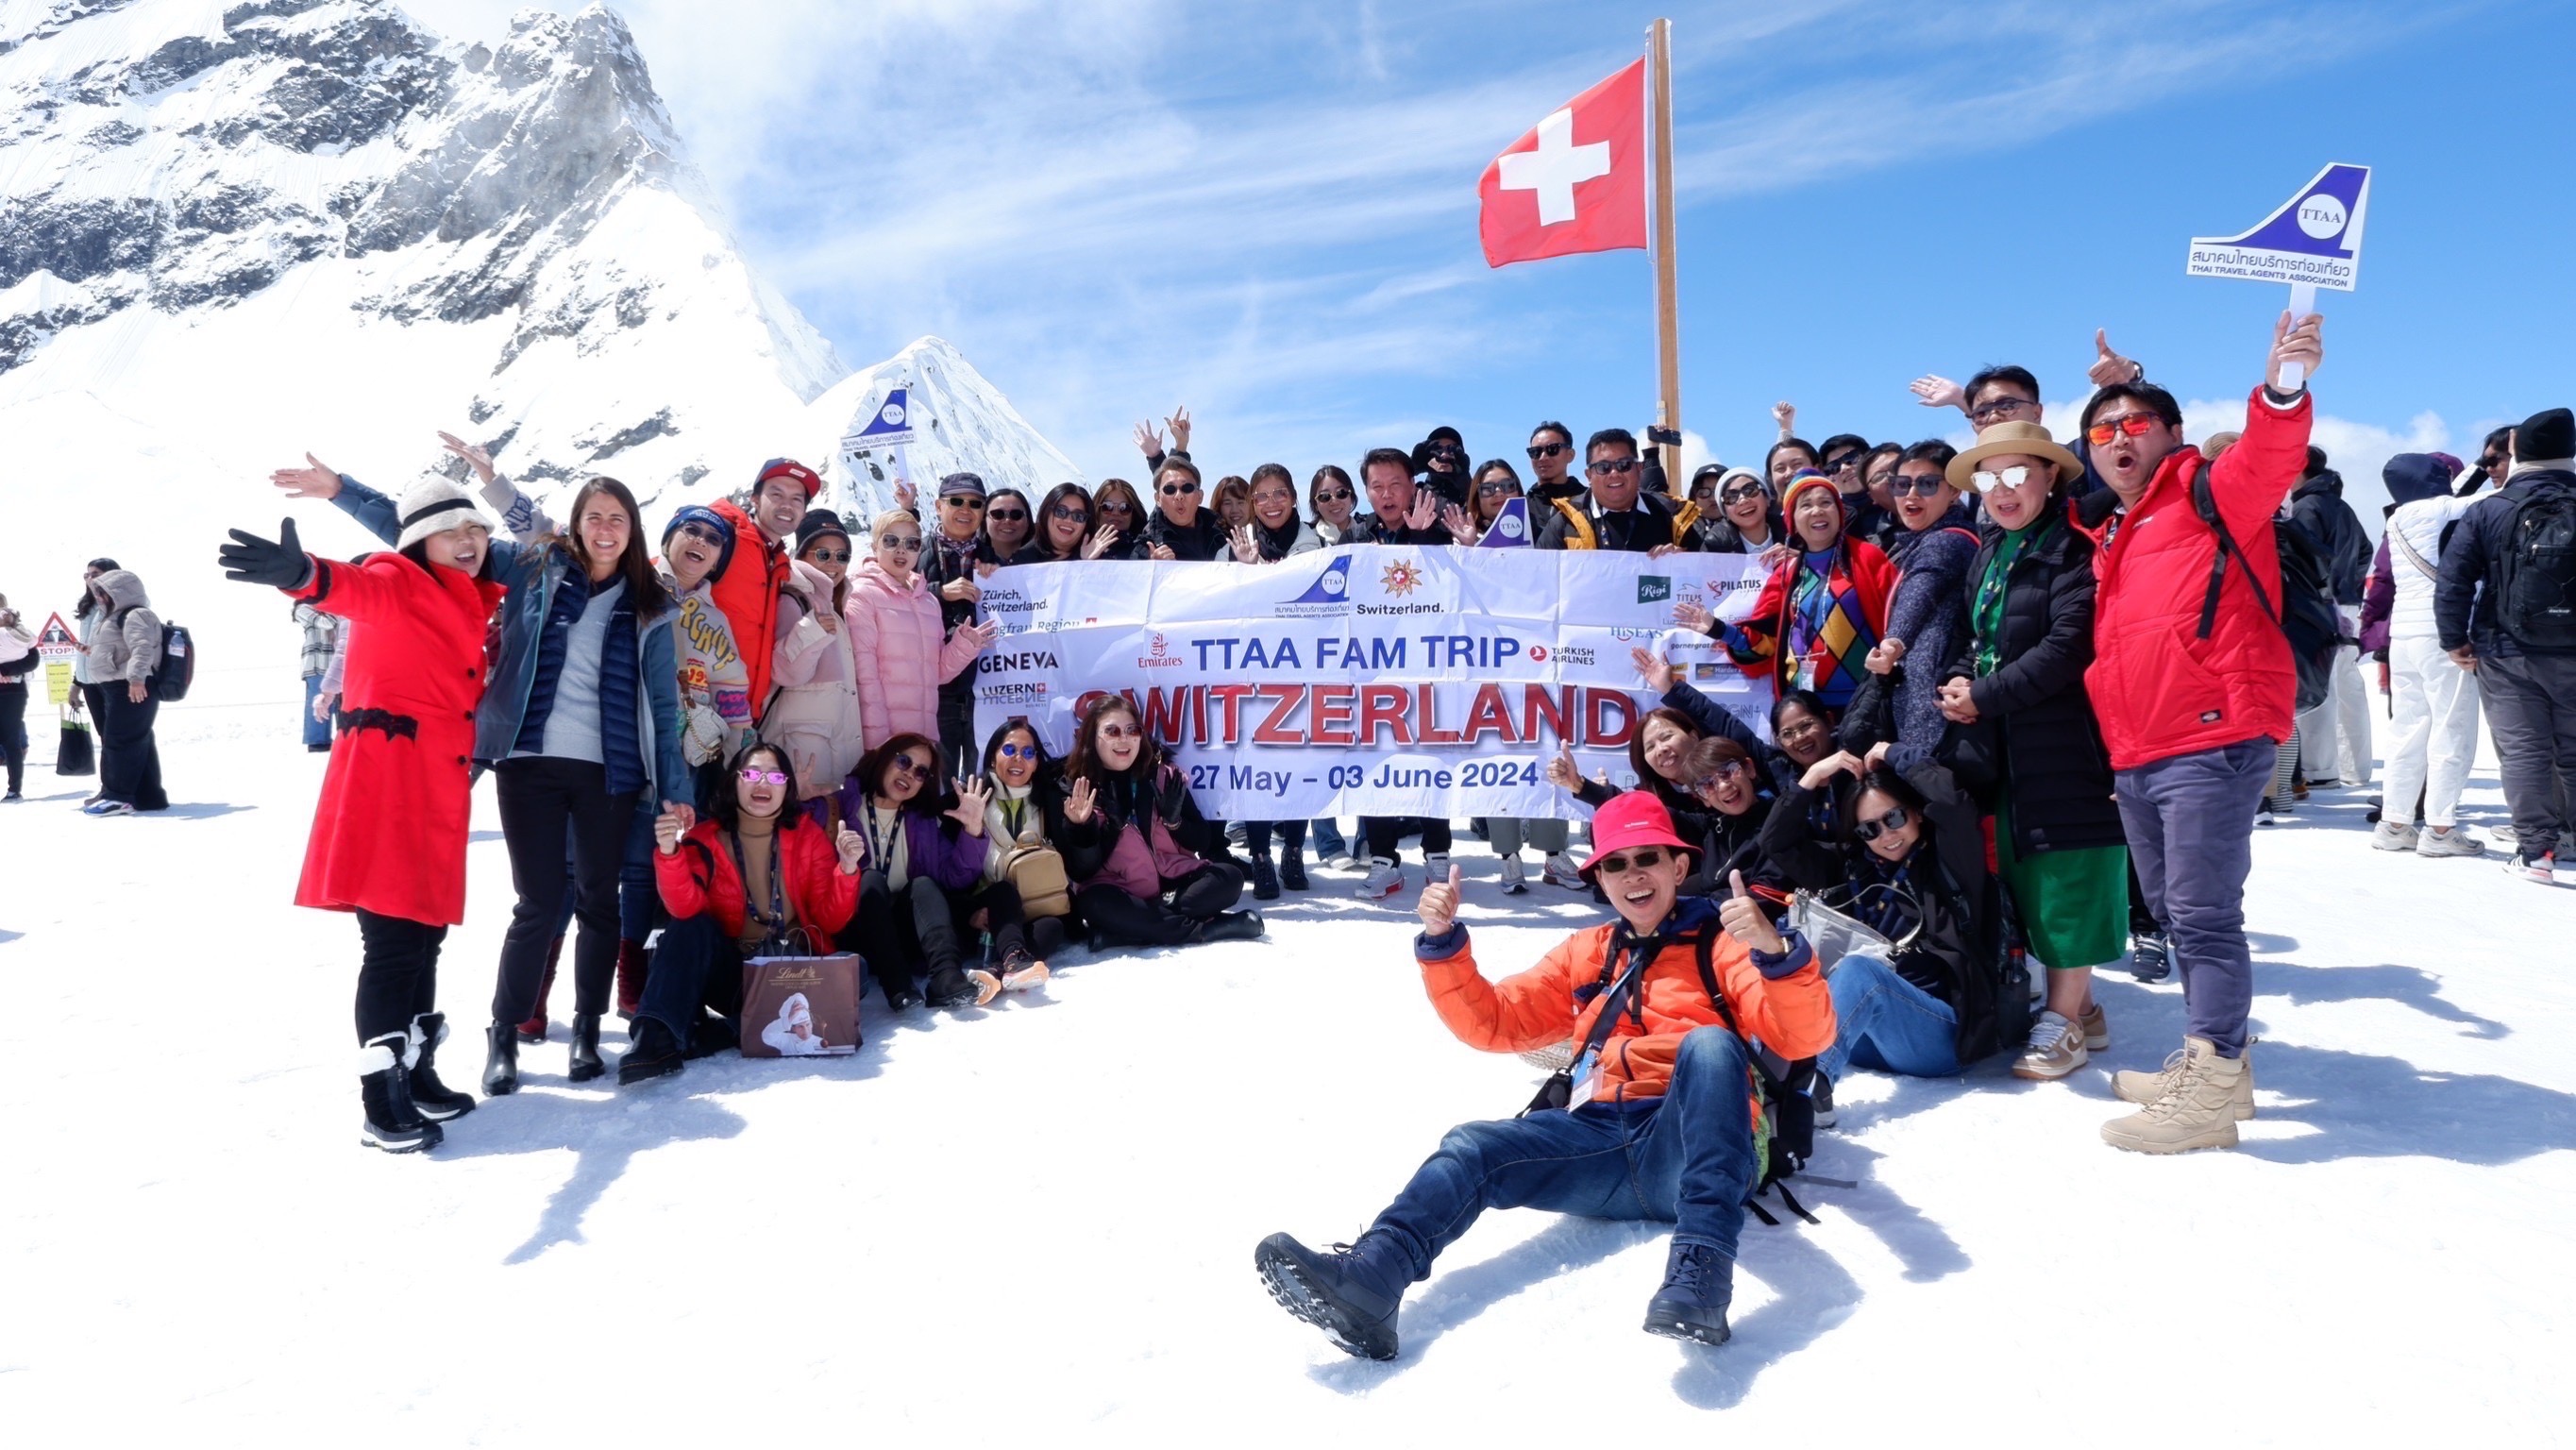 TTAA จัด ‘FAM TRIP’ เดินทางสำรวจเส้นทางท่องเที่ยวสวิตเซอร์แลนด์